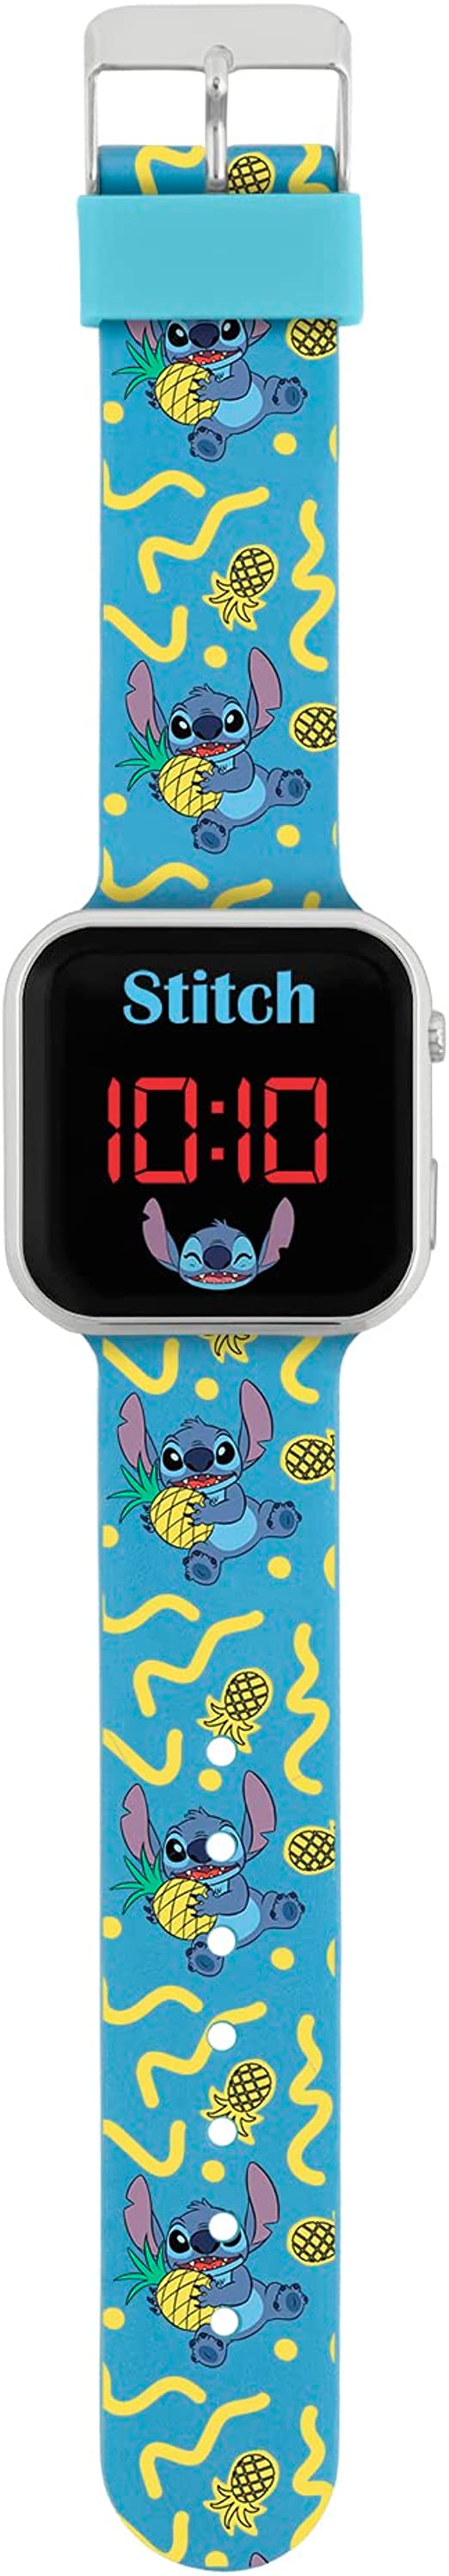 Regali & Gadget: Disney Stitch orologio led